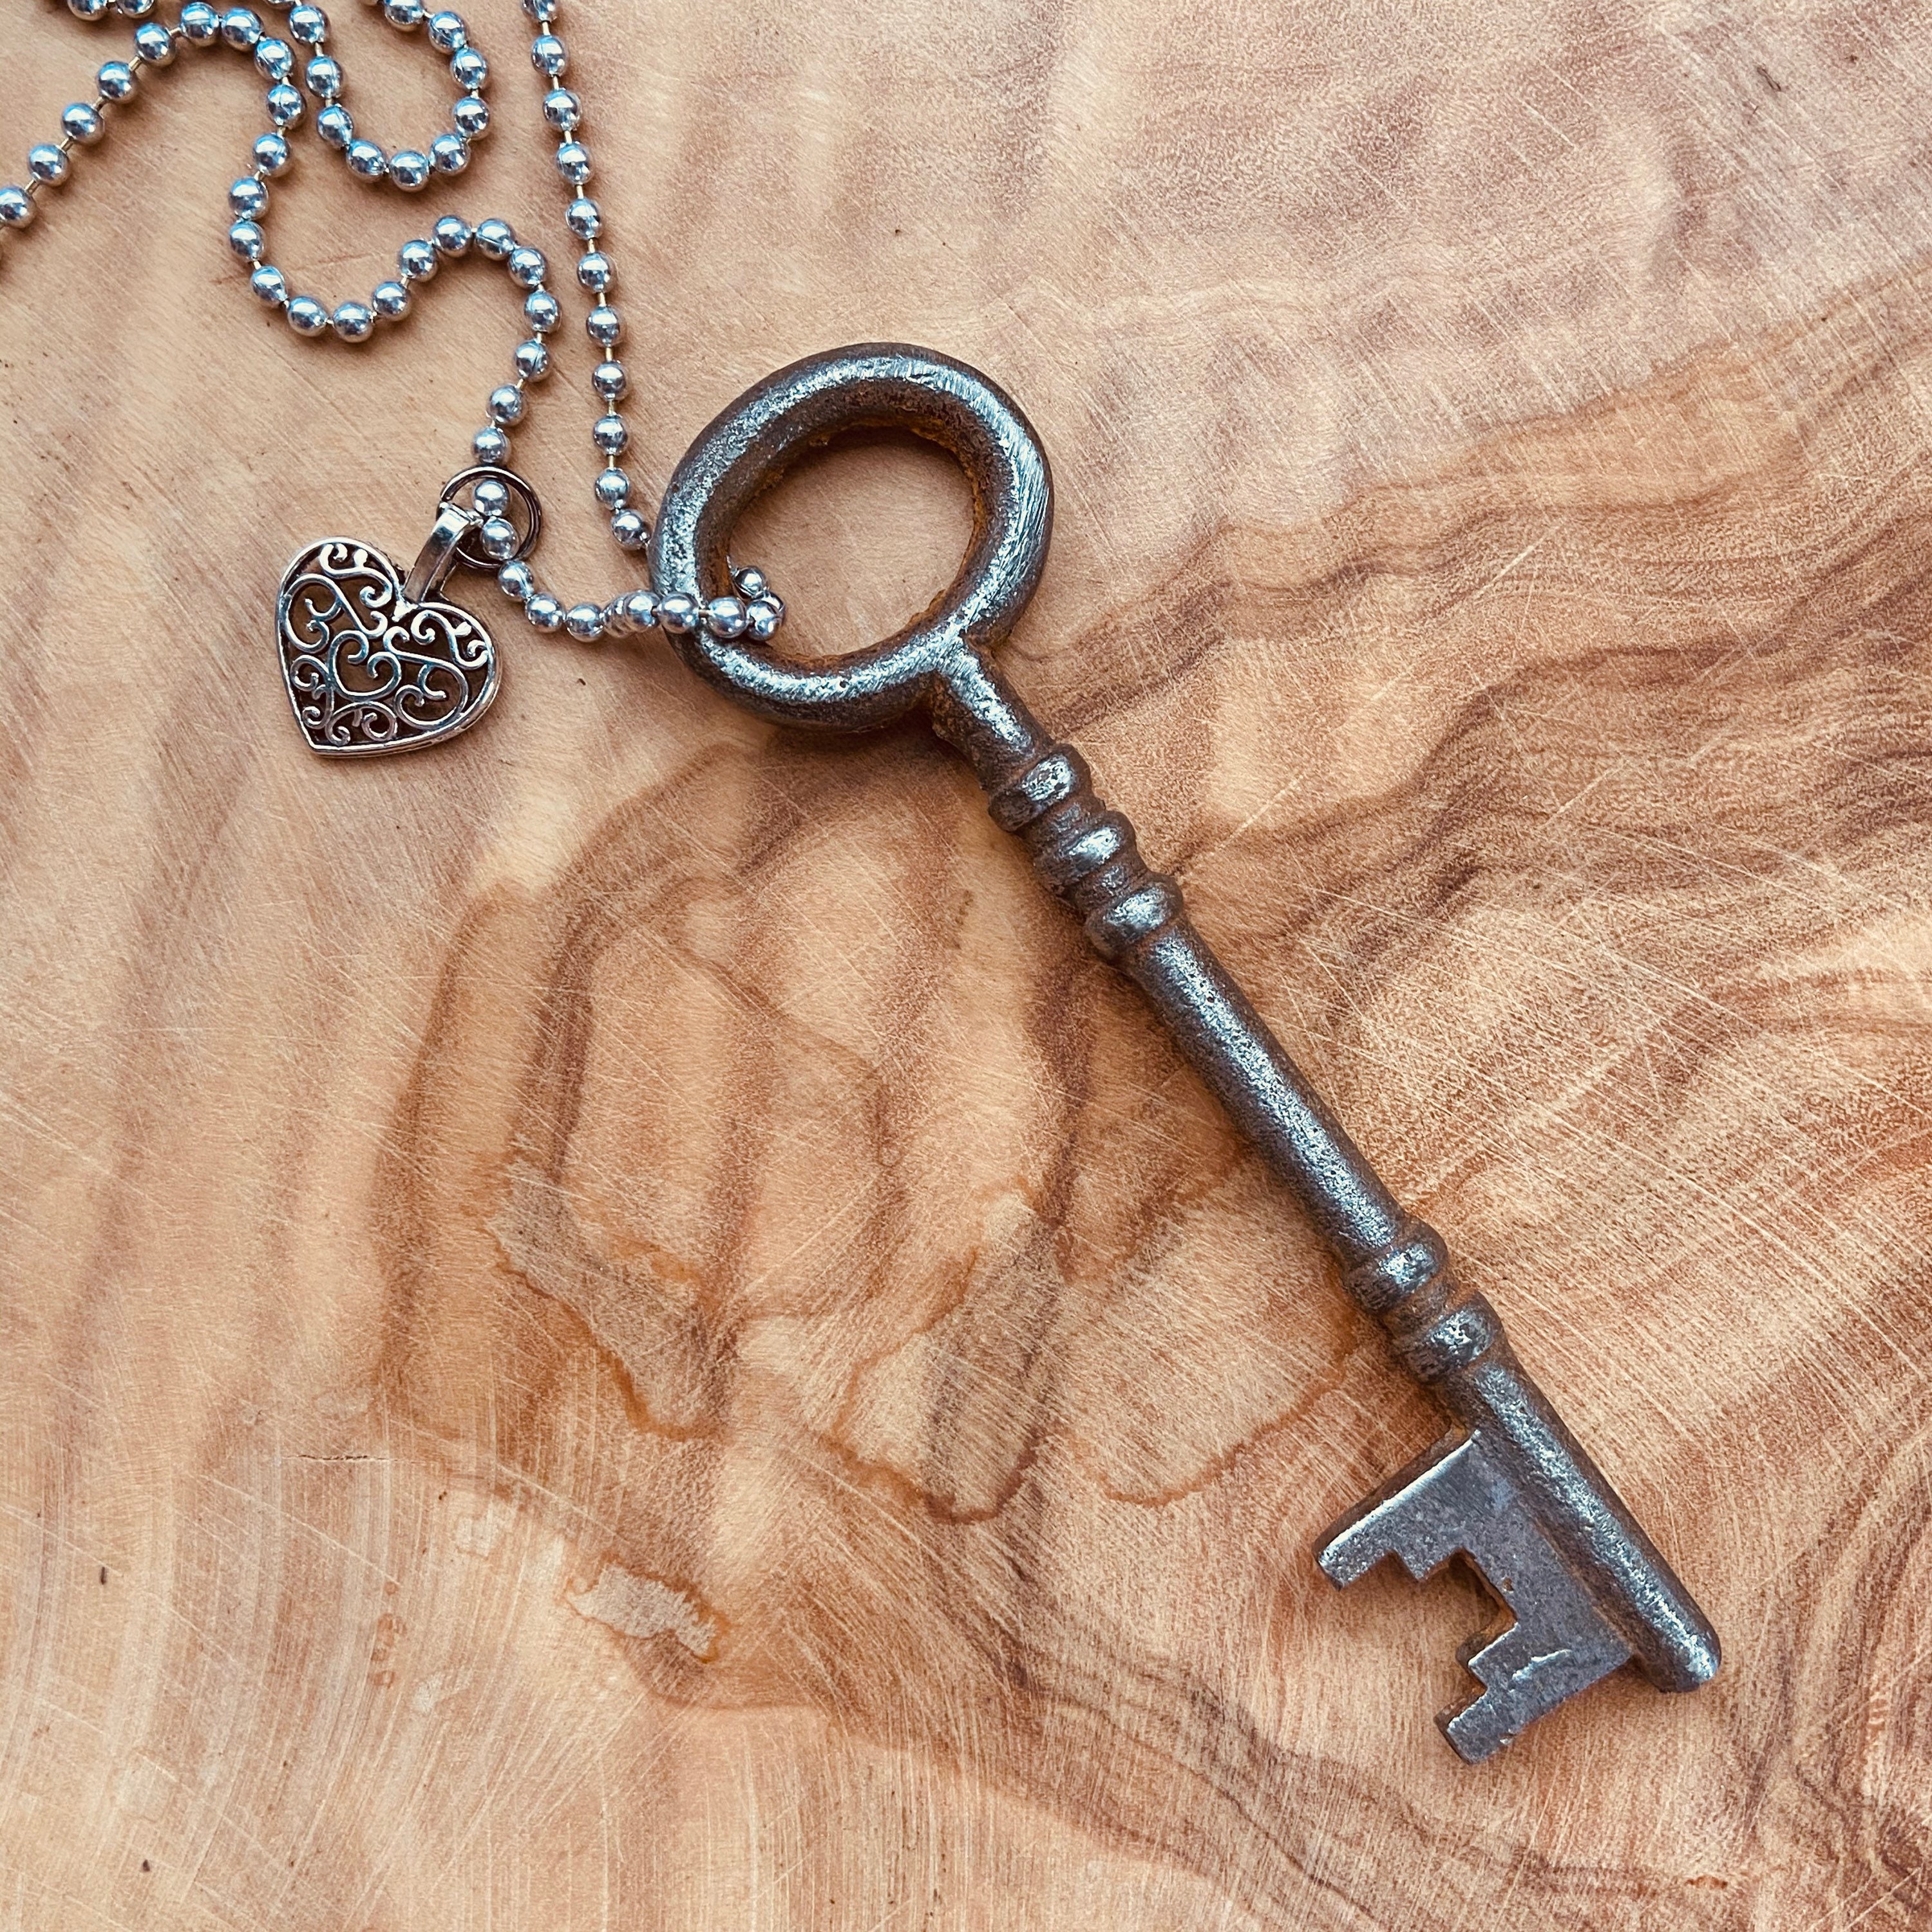 Classic Vampire Skull Skeleton Key Necklace | The Alley